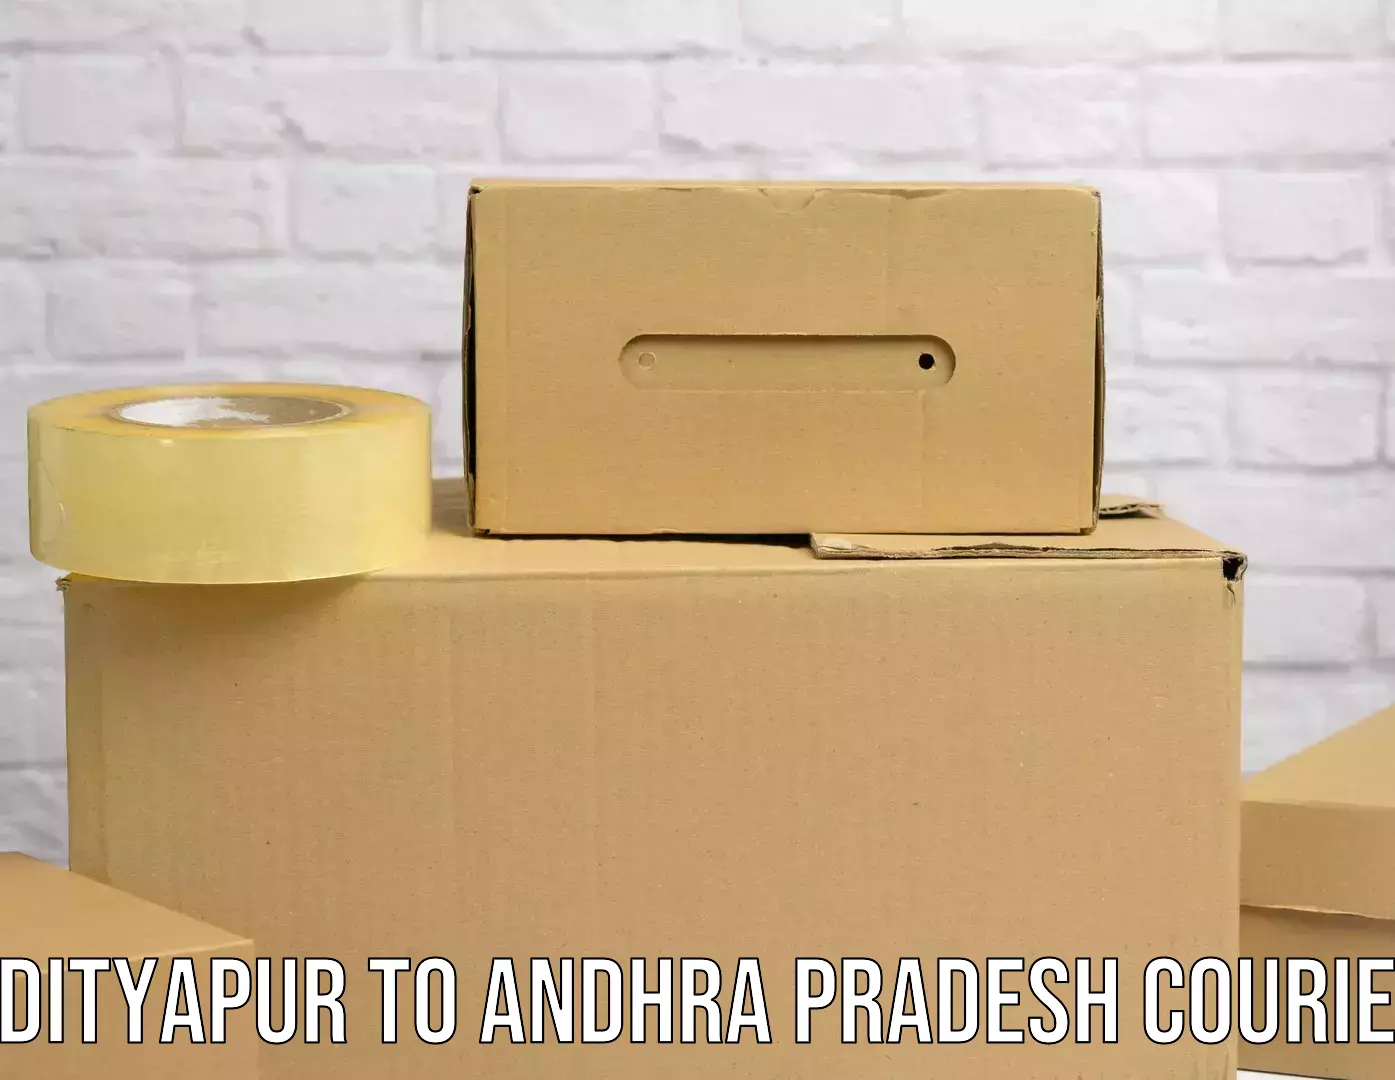 Advanced delivery network Adityapur to Challapalli